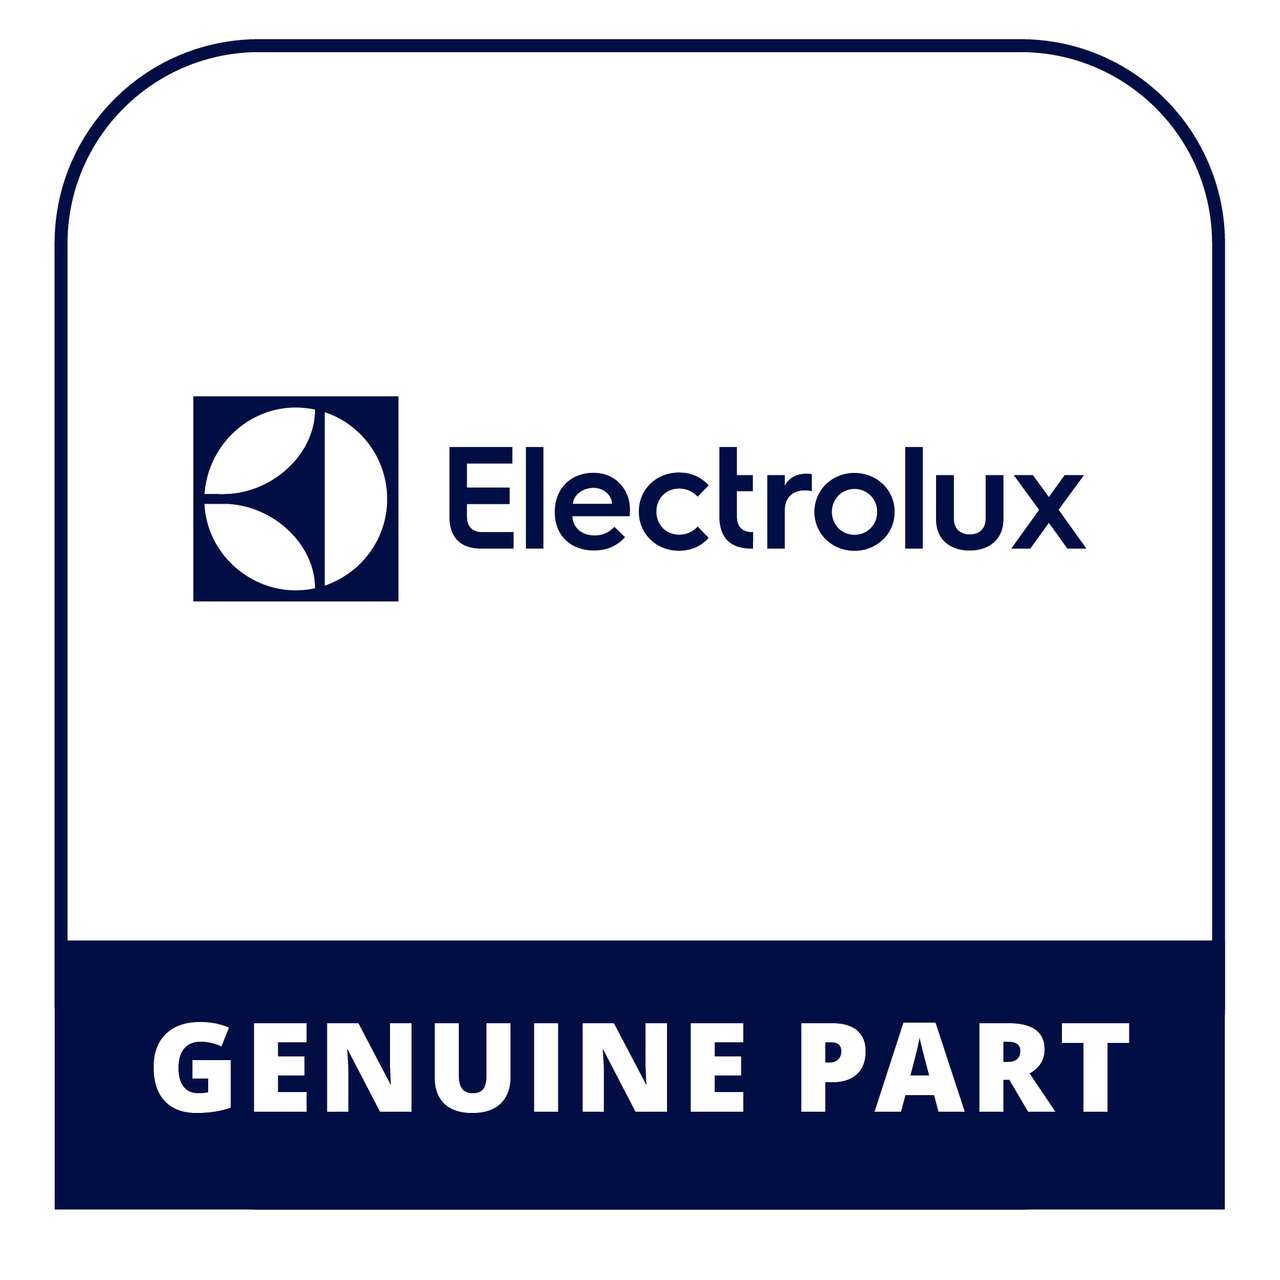 Frigidaire - Electrolux 5304467787 Panel - Genuine Electrolux Part